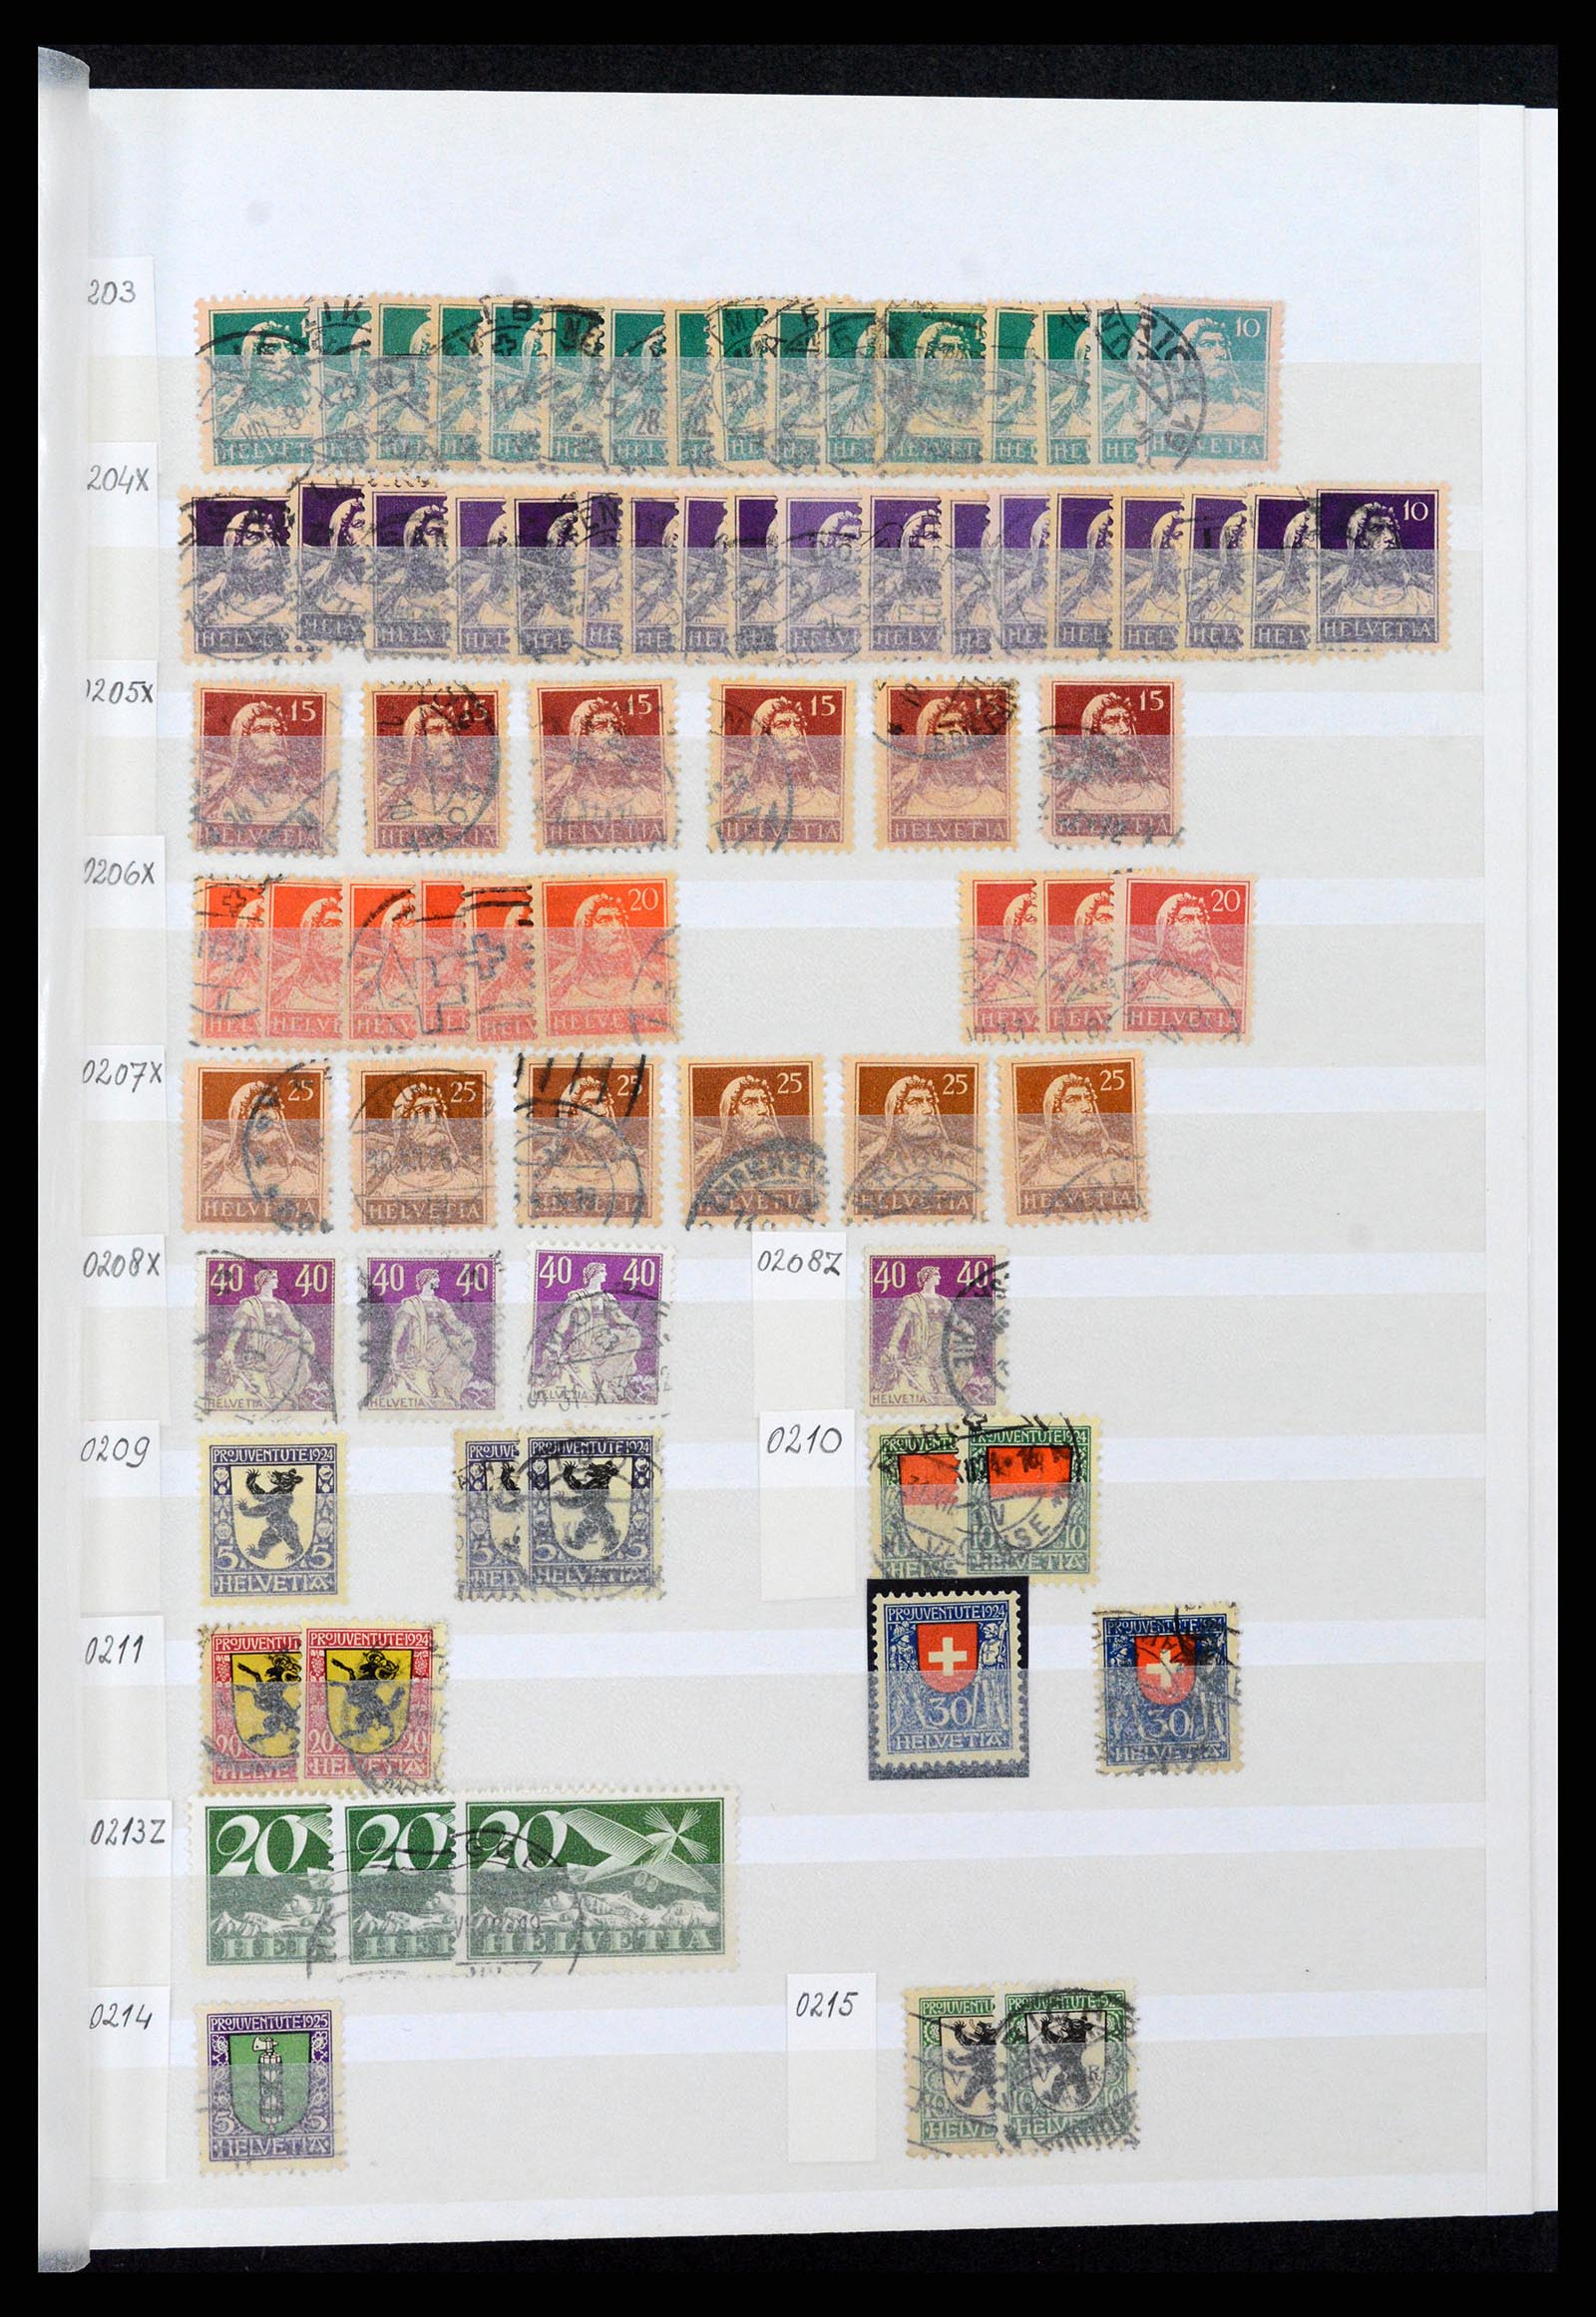 37328 013 - Stamp collection 37328 Switzerland 1854-1991.